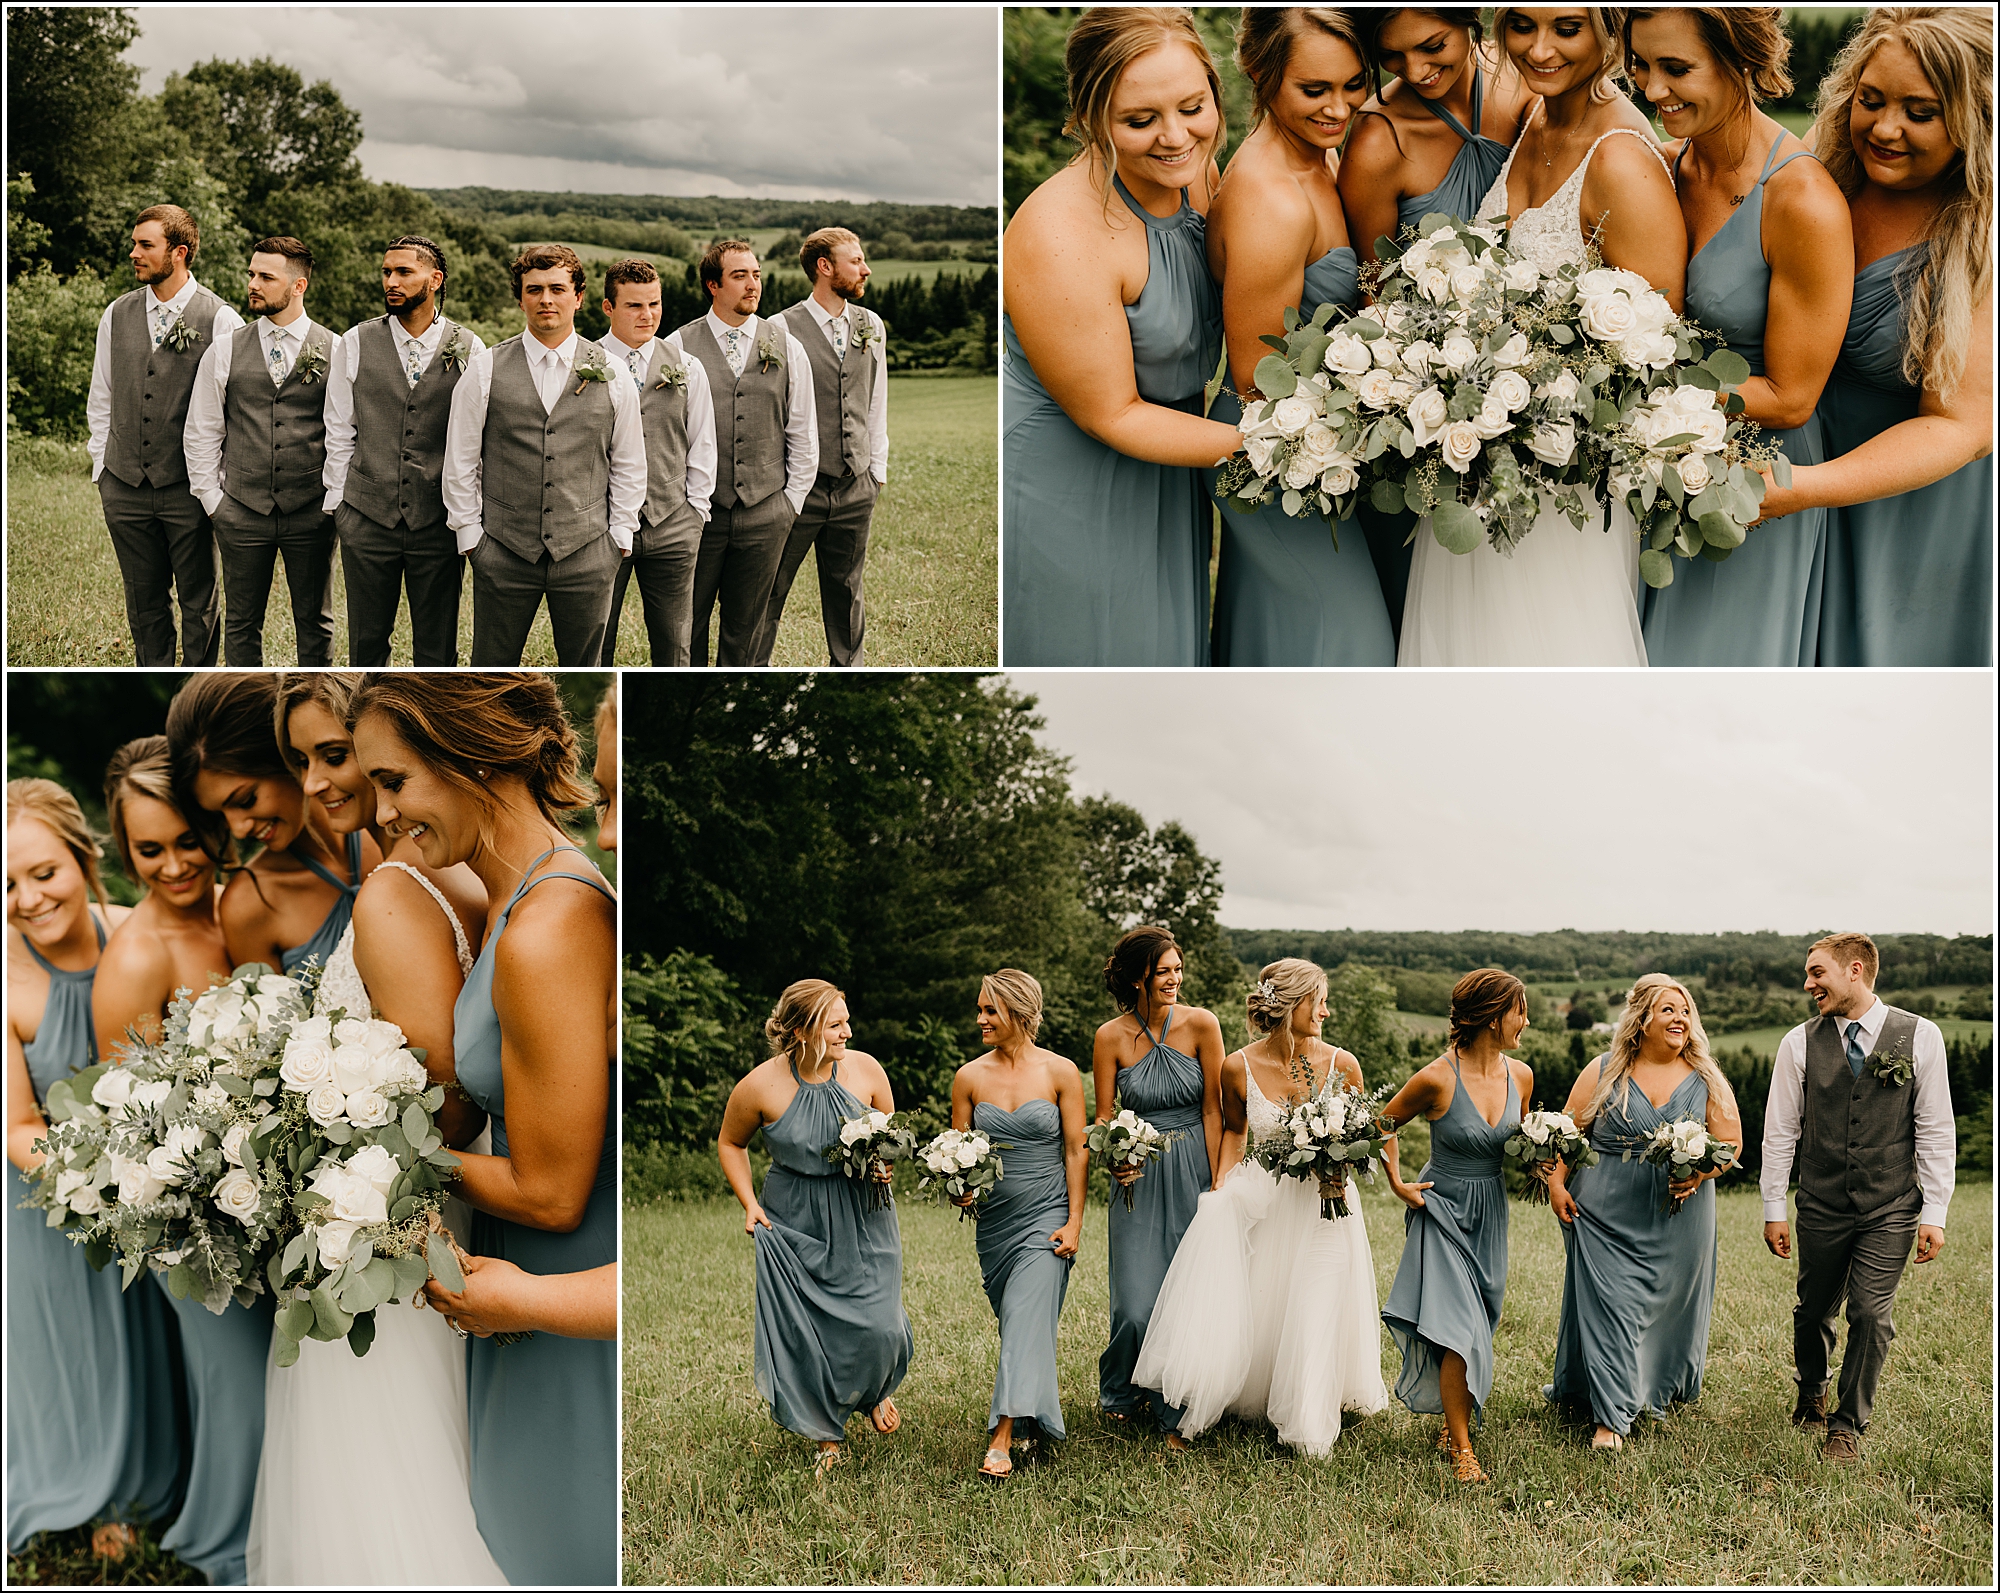 La Crosse, WI wedding photographer wedding party bridesmaids groomsmen grey vests blue dresses green white flowers bouquets